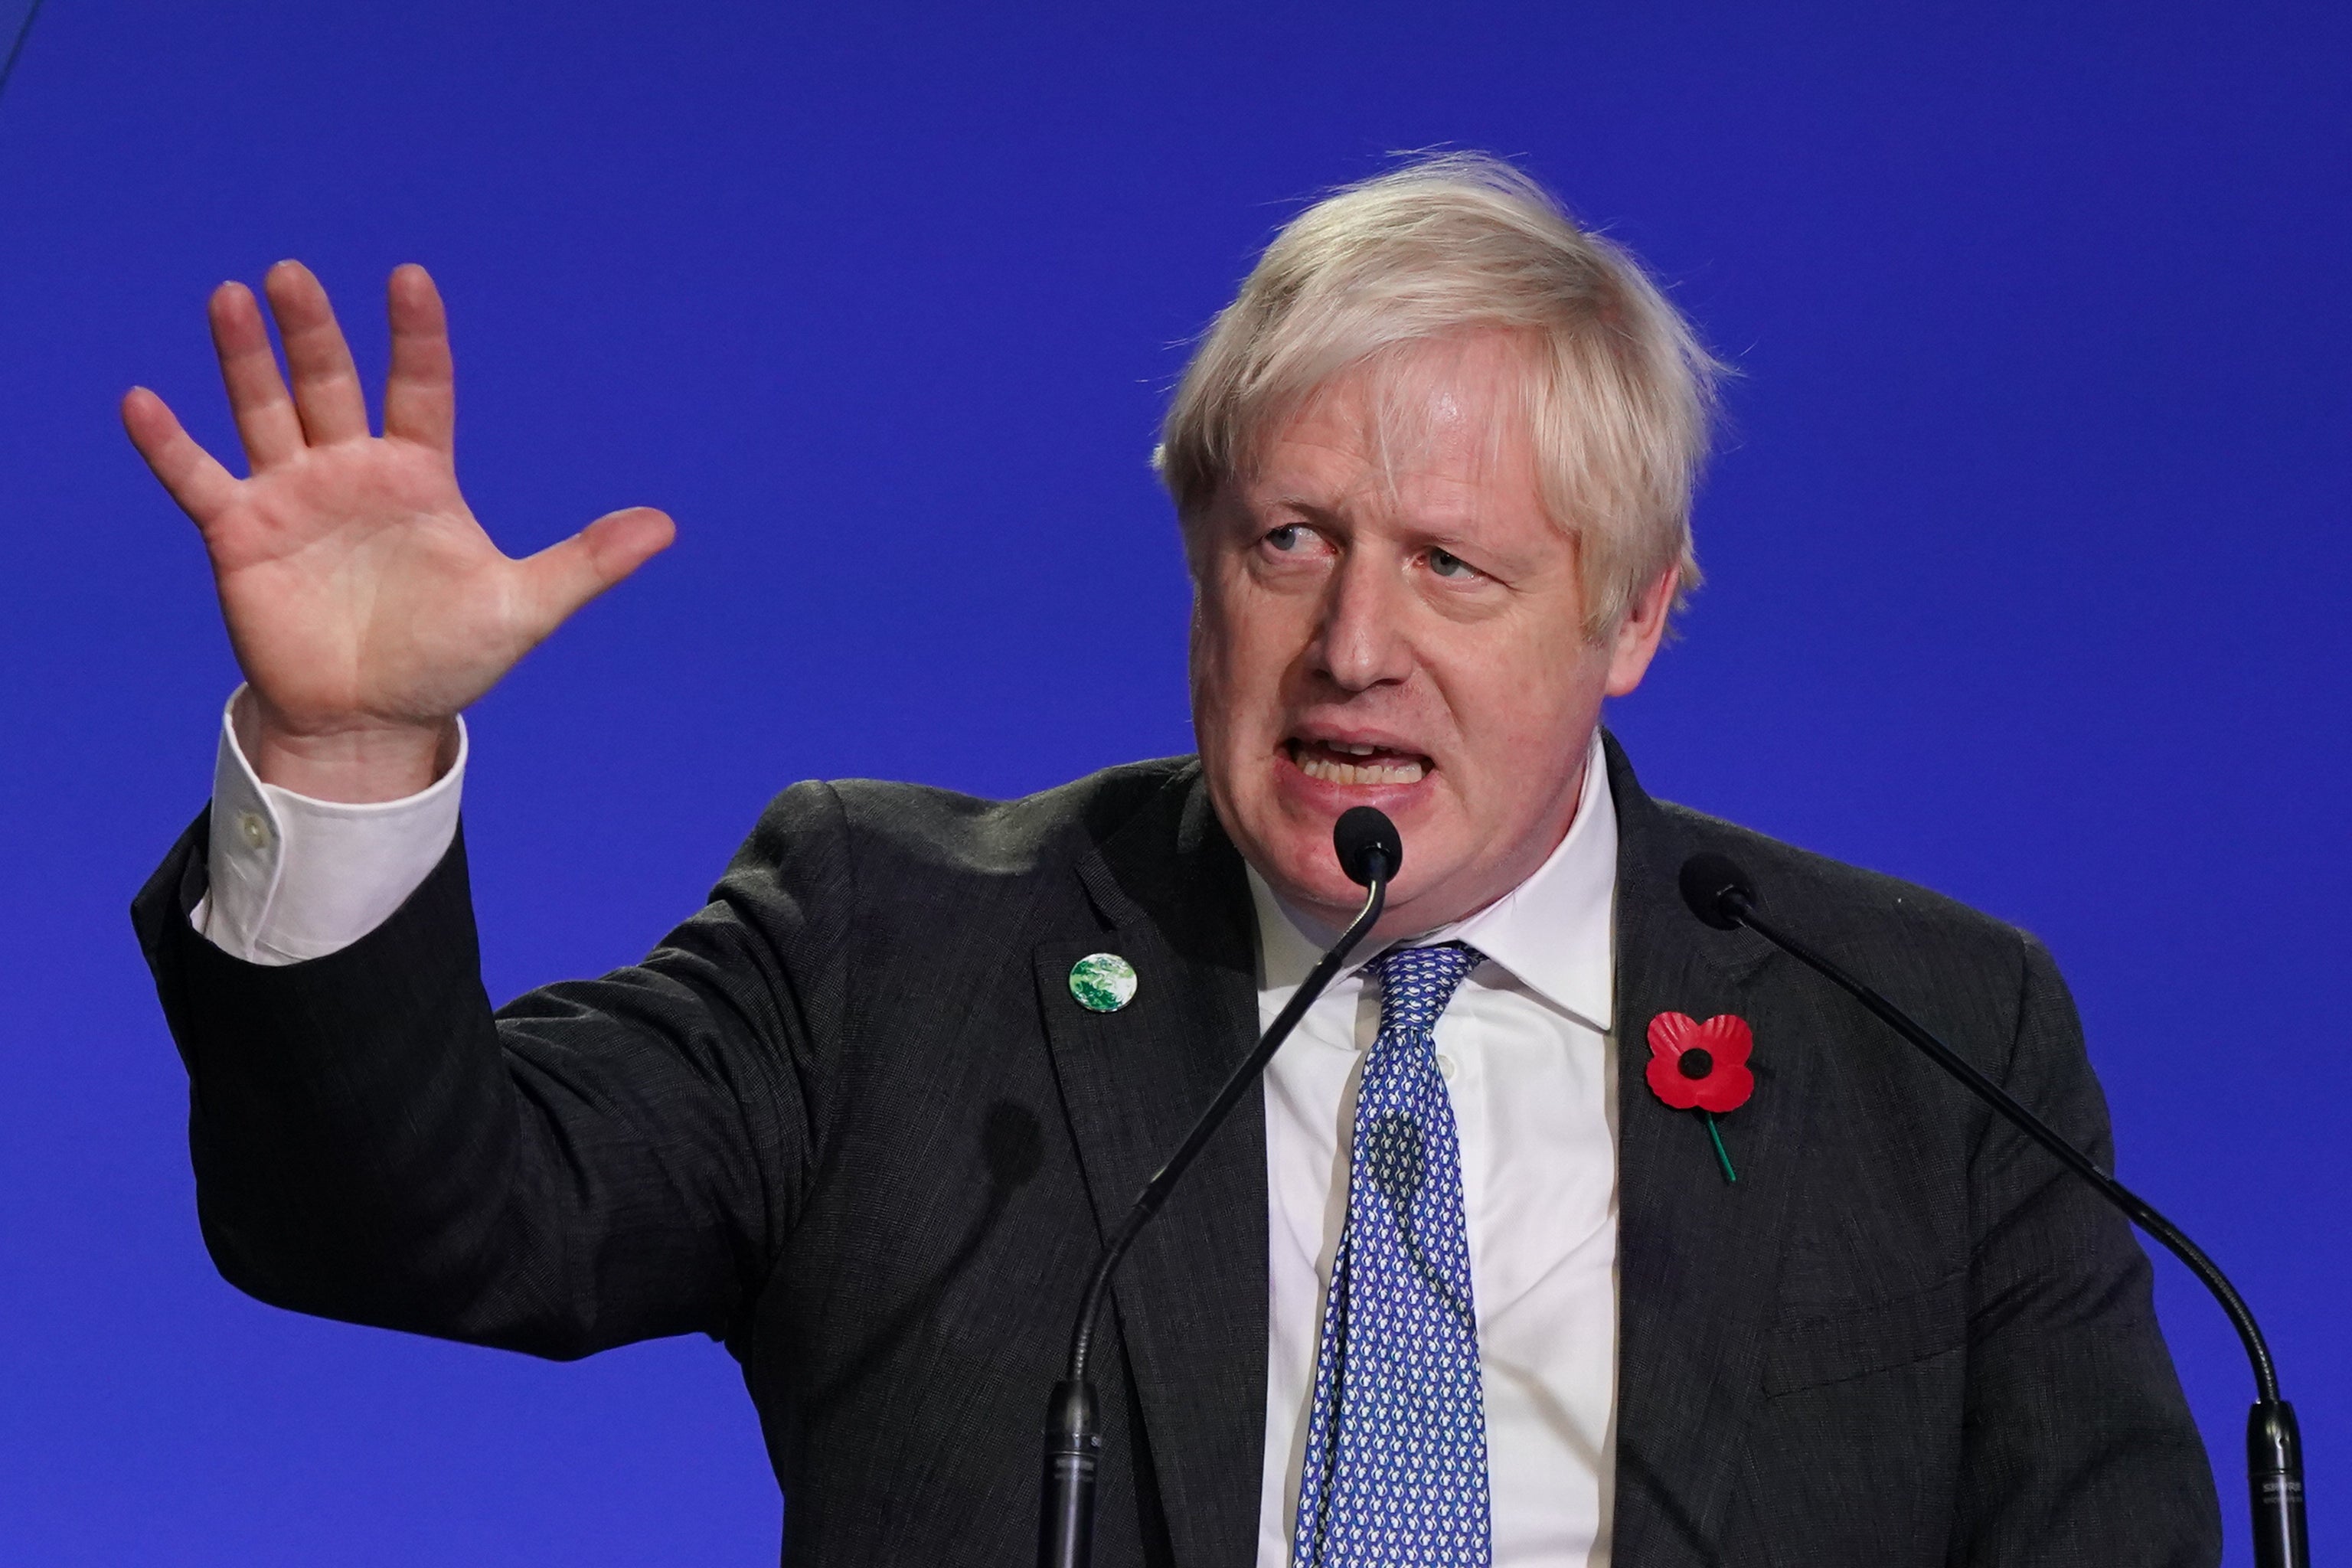 Boris Johnson at the climate summit on Tuesday